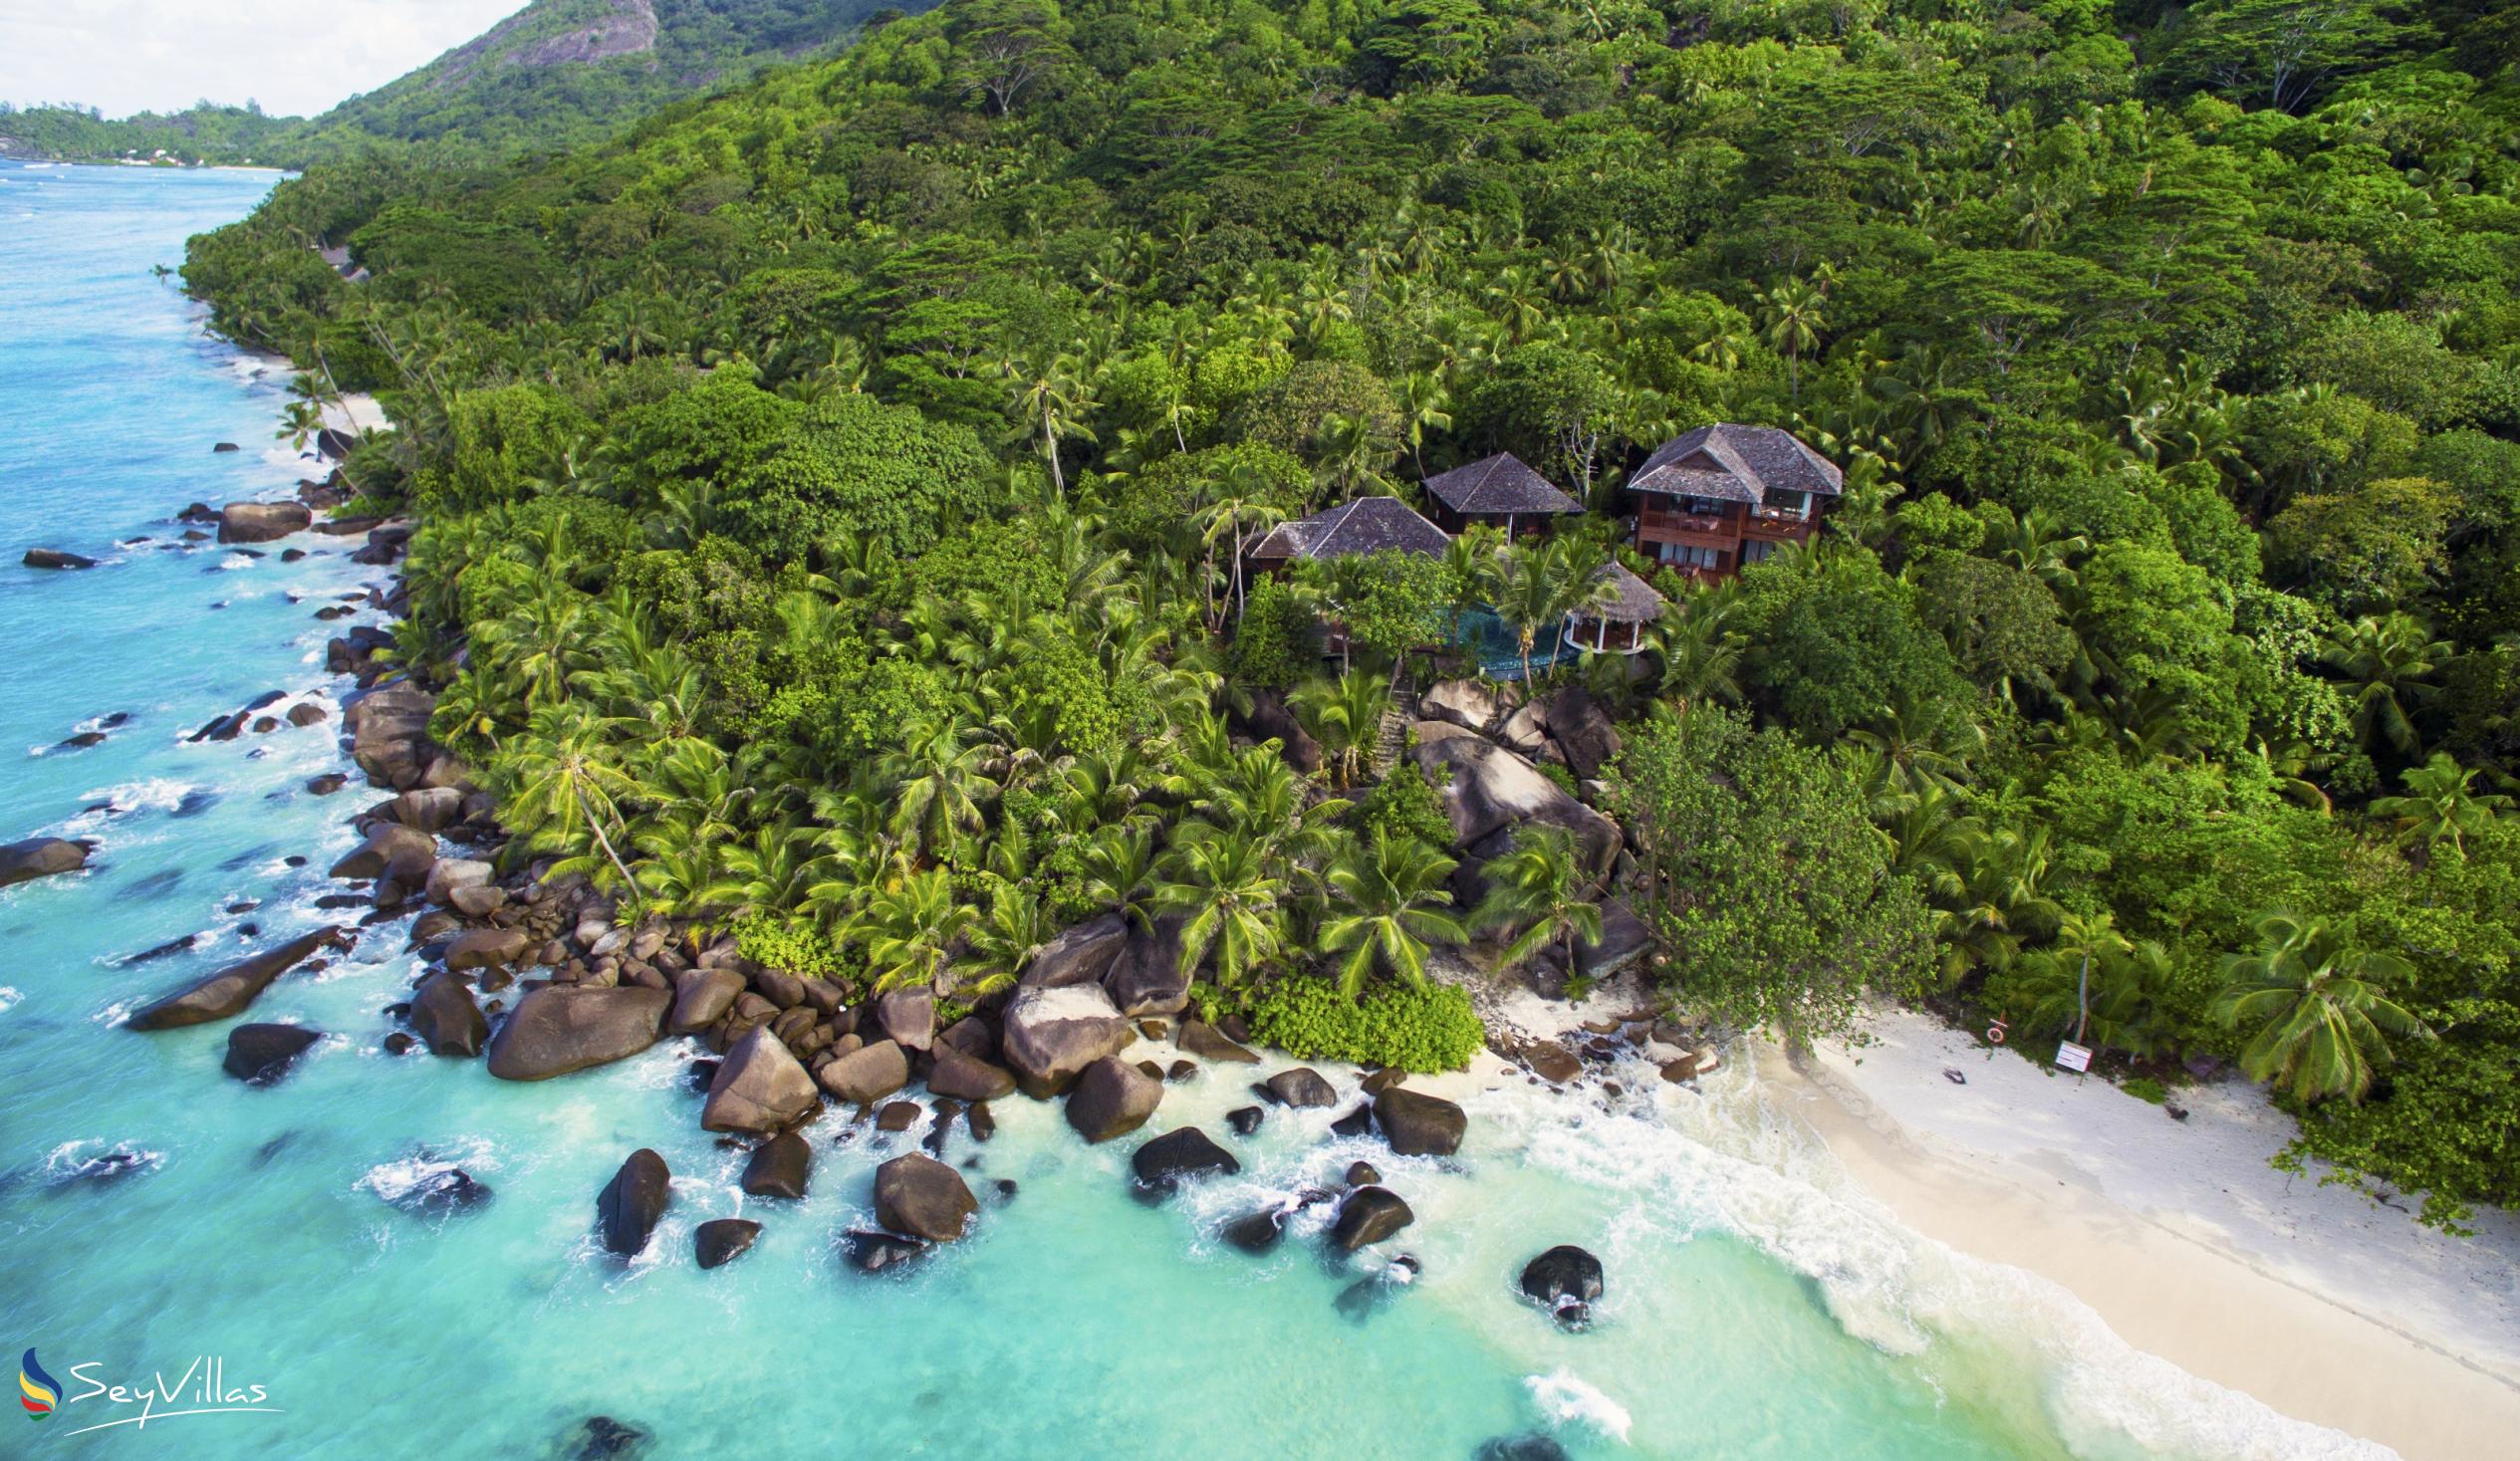 Photo 74: Hilton Seychelles Labriz Resort & Spa - Two Bedroom Silhouette Estate - Silhouette Island (Seychelles)